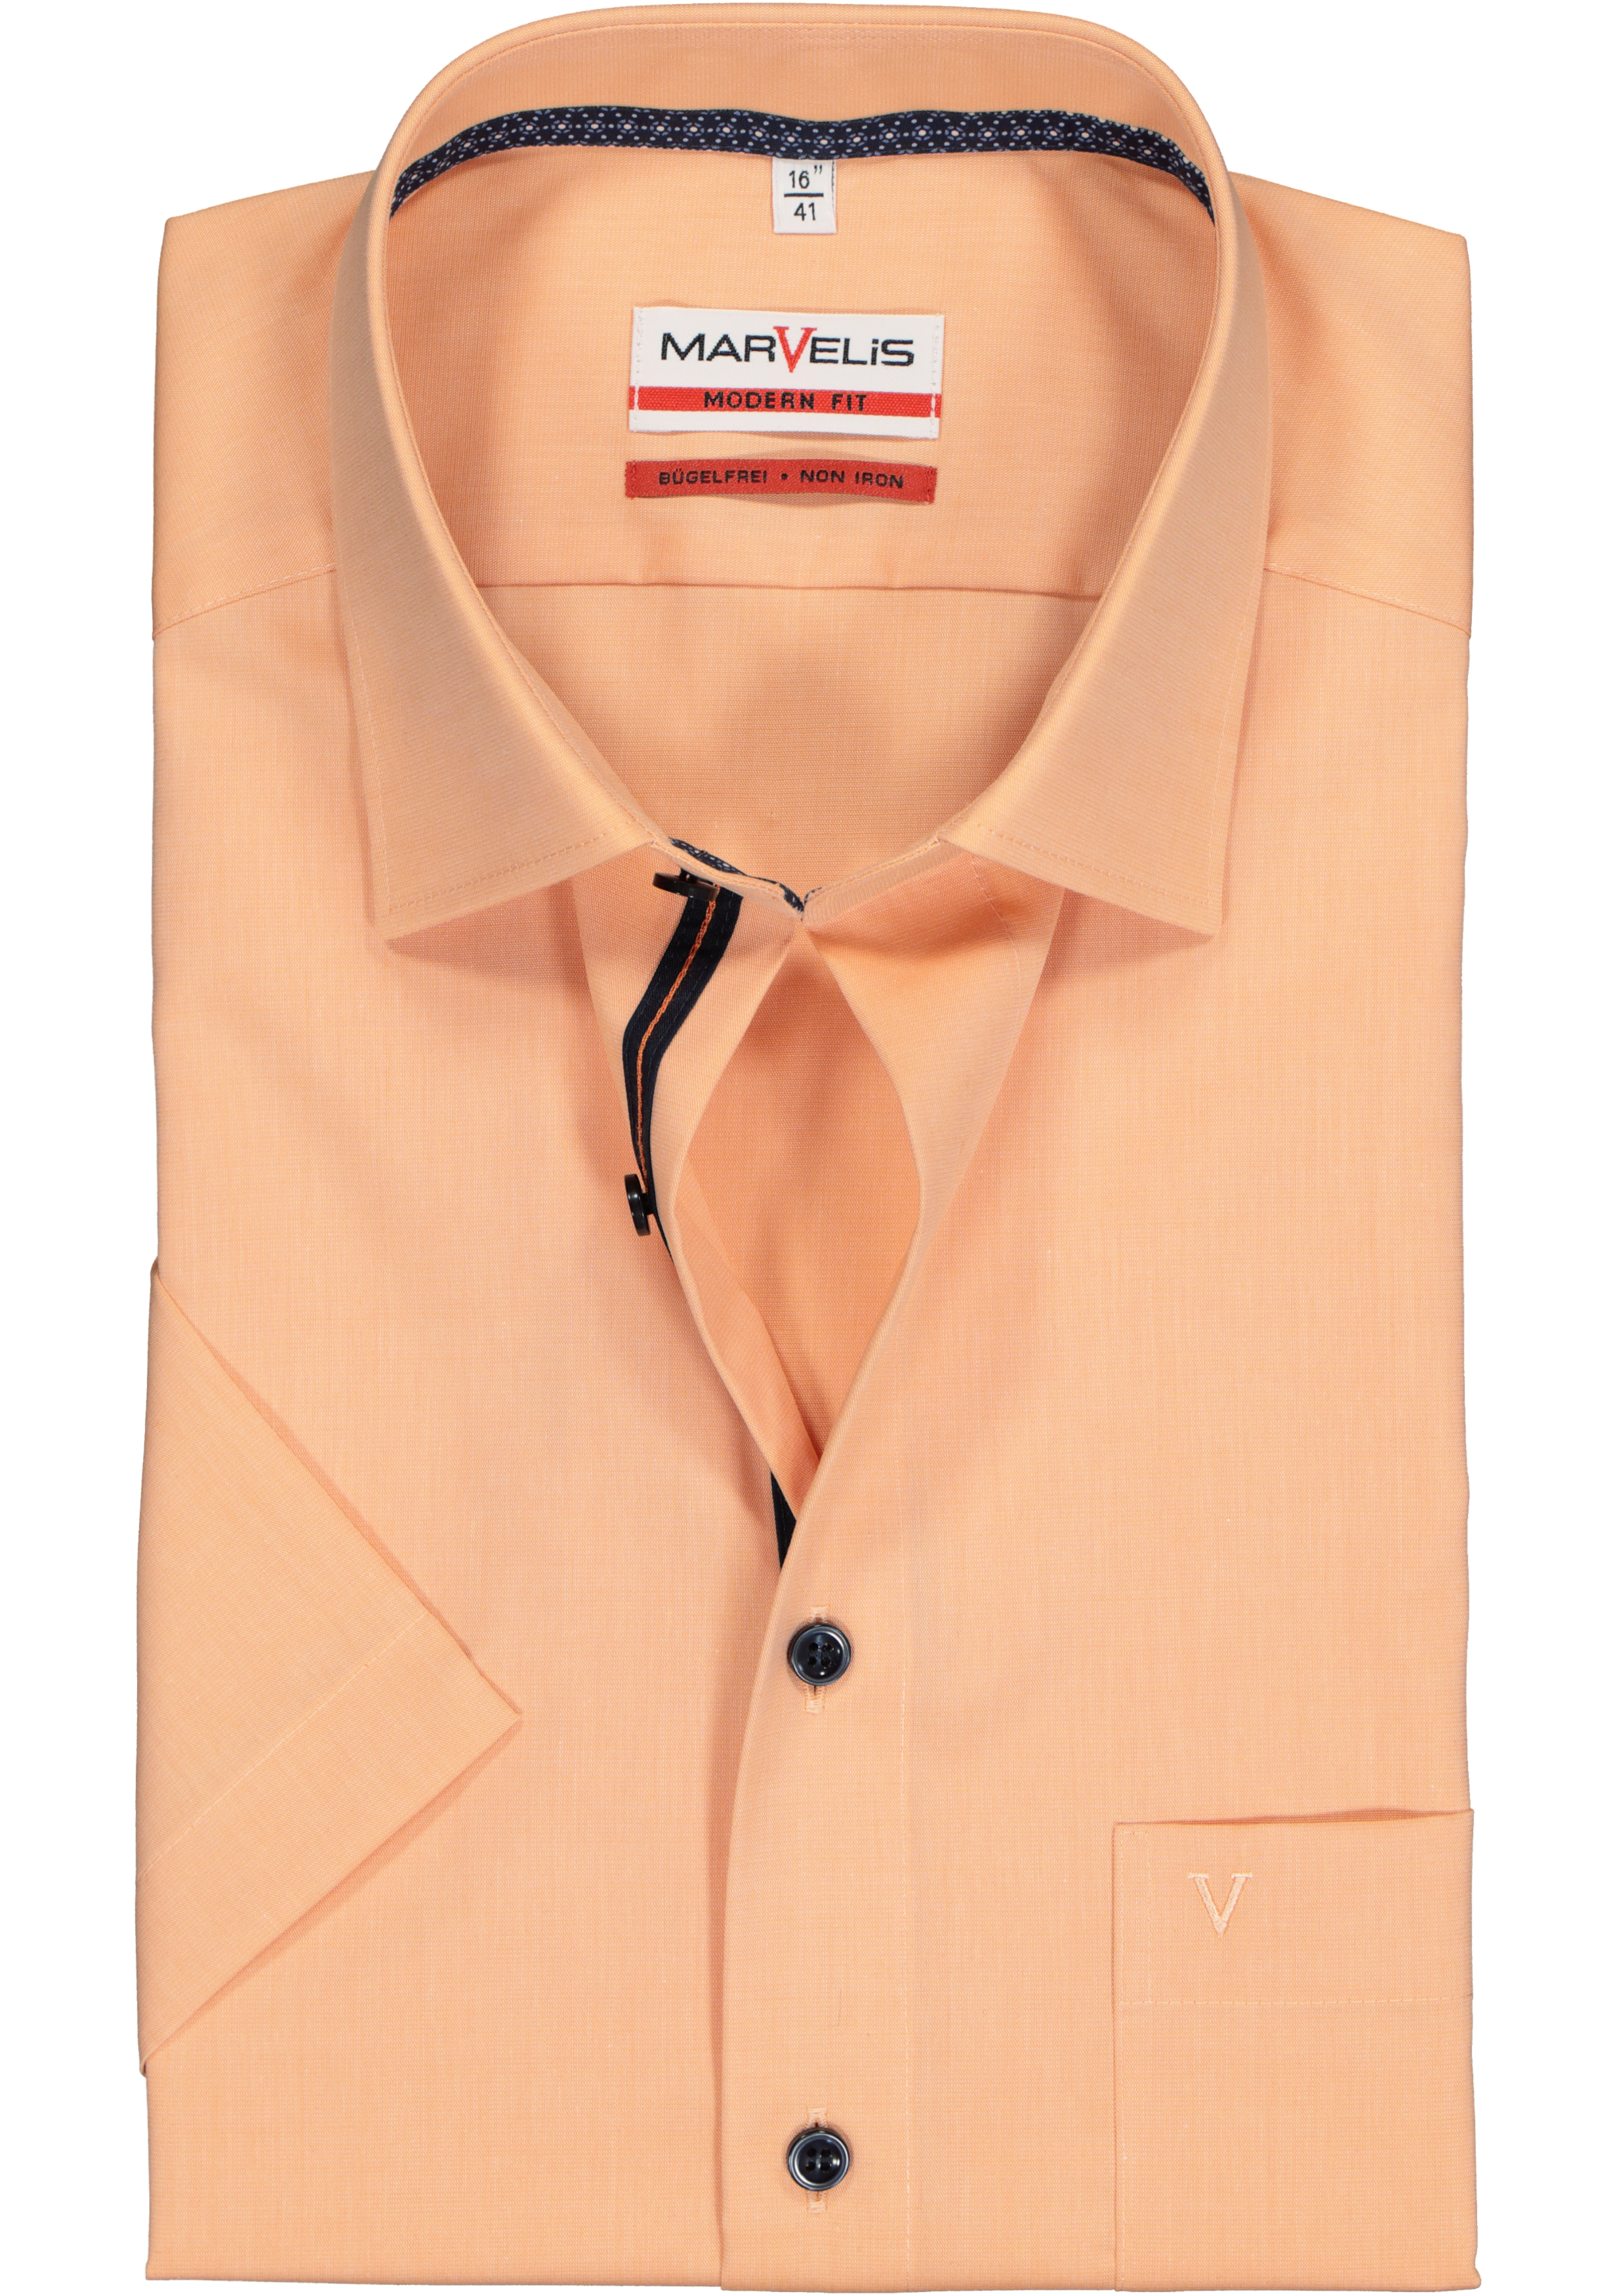 detectie Beginner angst MARVELIS modern fit overhemd, korte mouw, fil a fil, oranje (contrast) -  Zomer SALE tot 50% korting